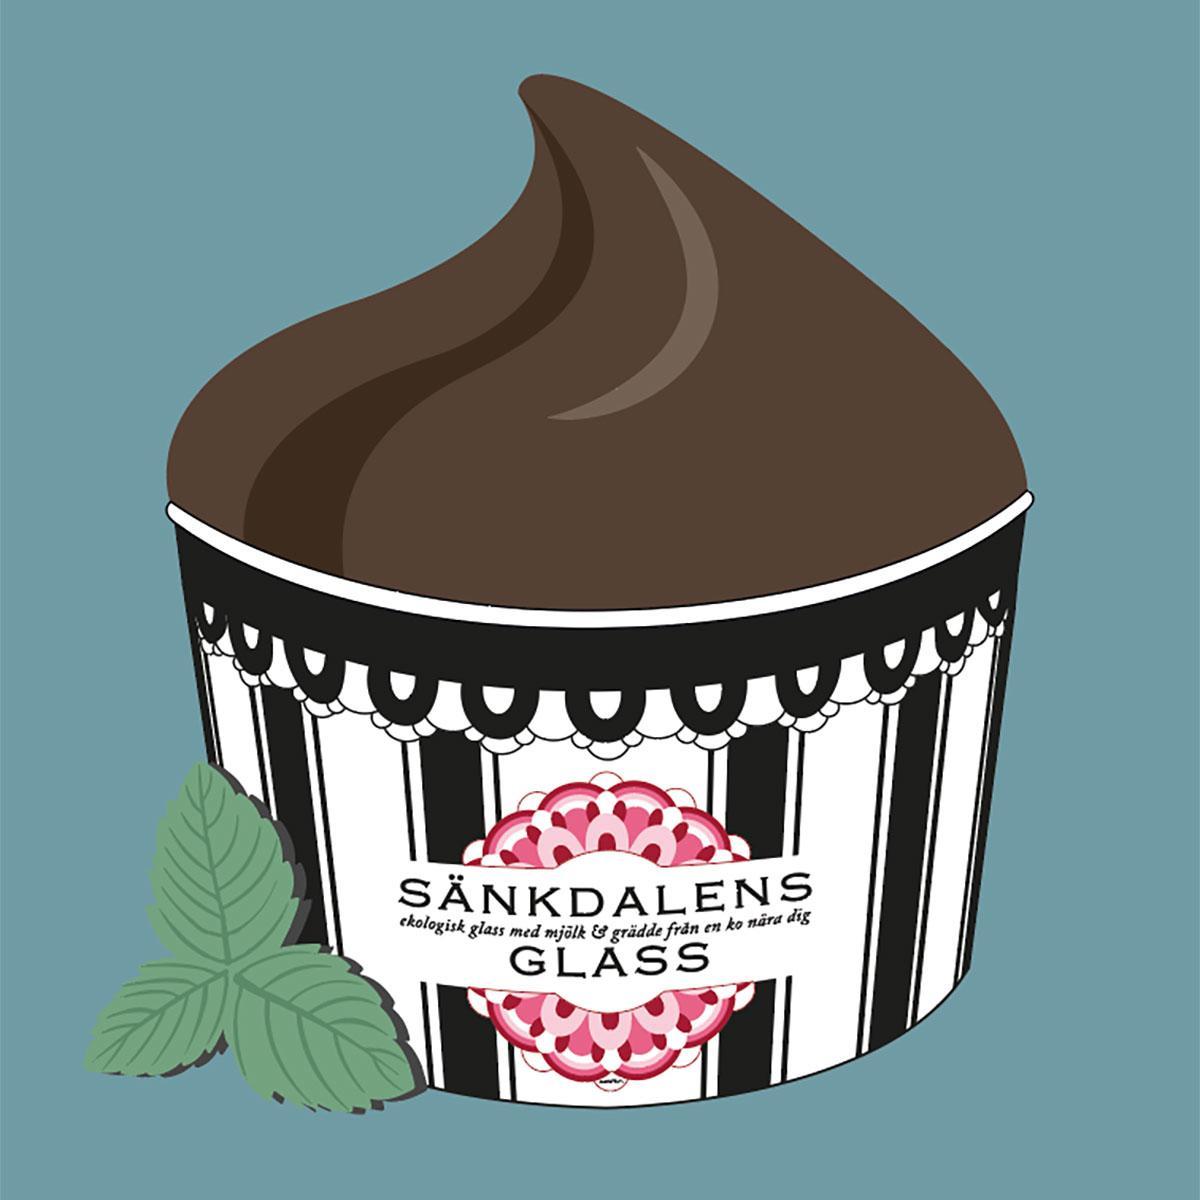 Sänkdalens glass's Mint Chocolate Ice Cream '